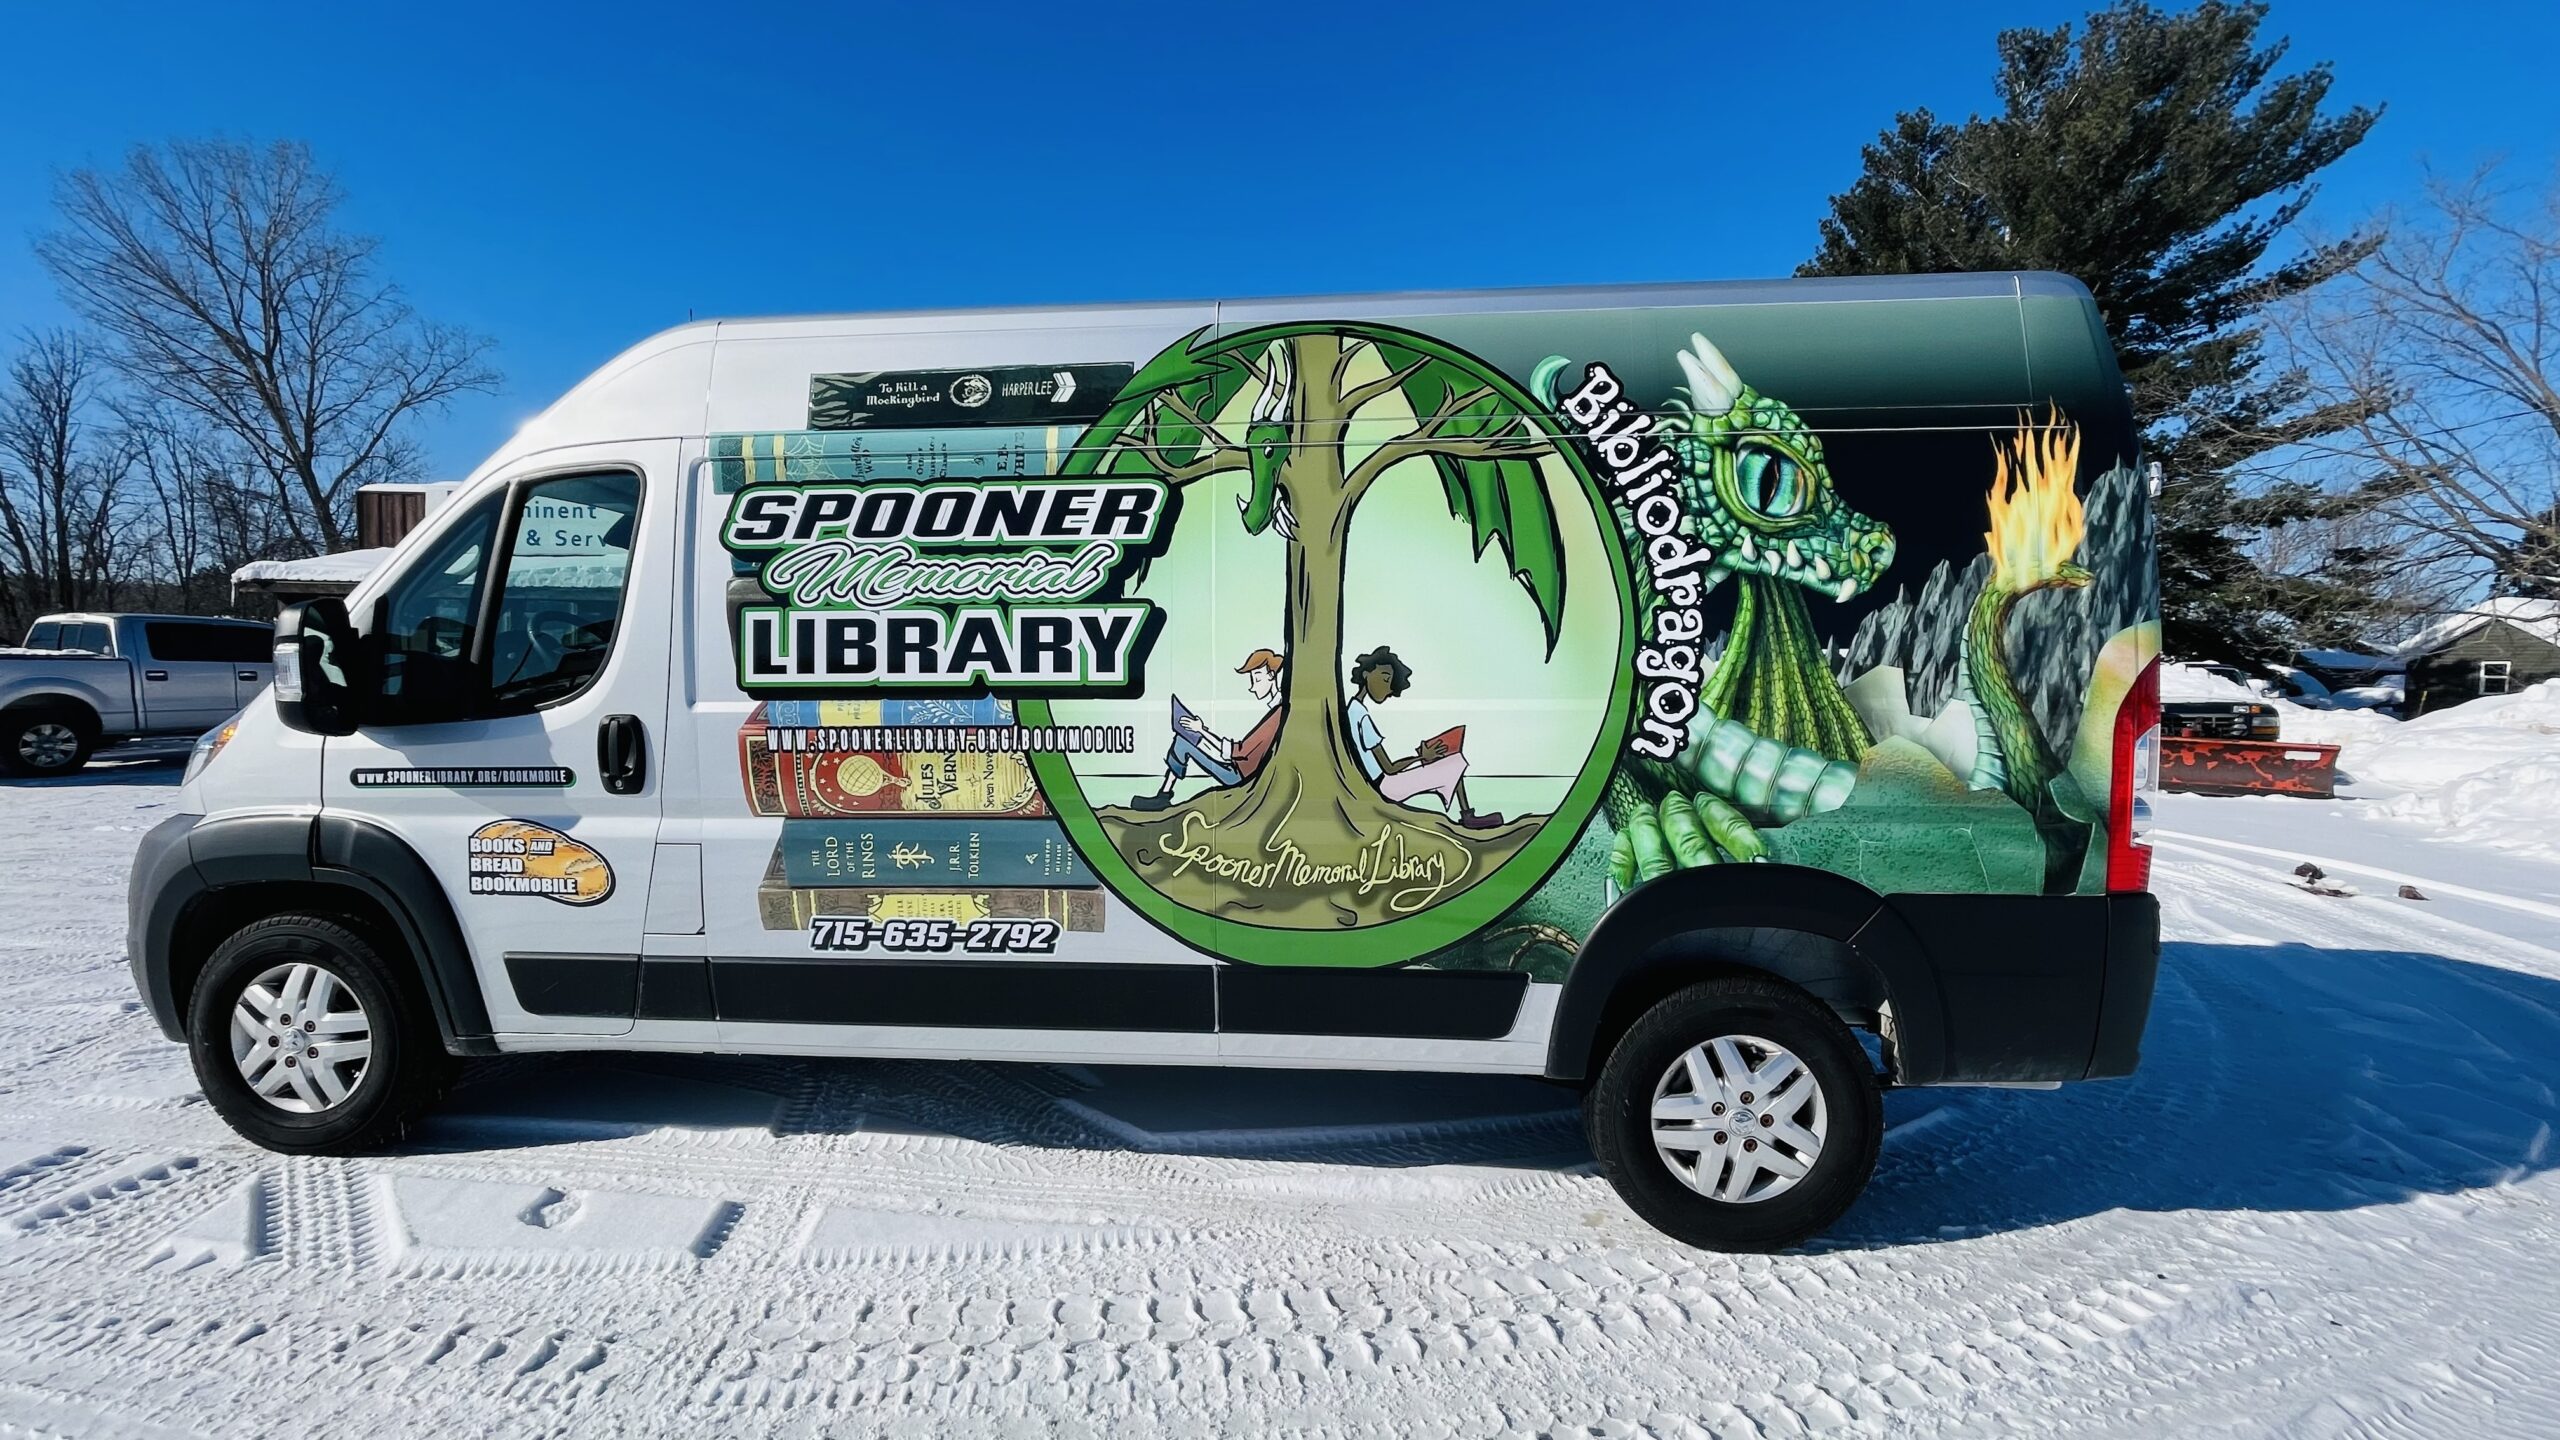 Spooner's bookmobile, the "Bibliodragon"